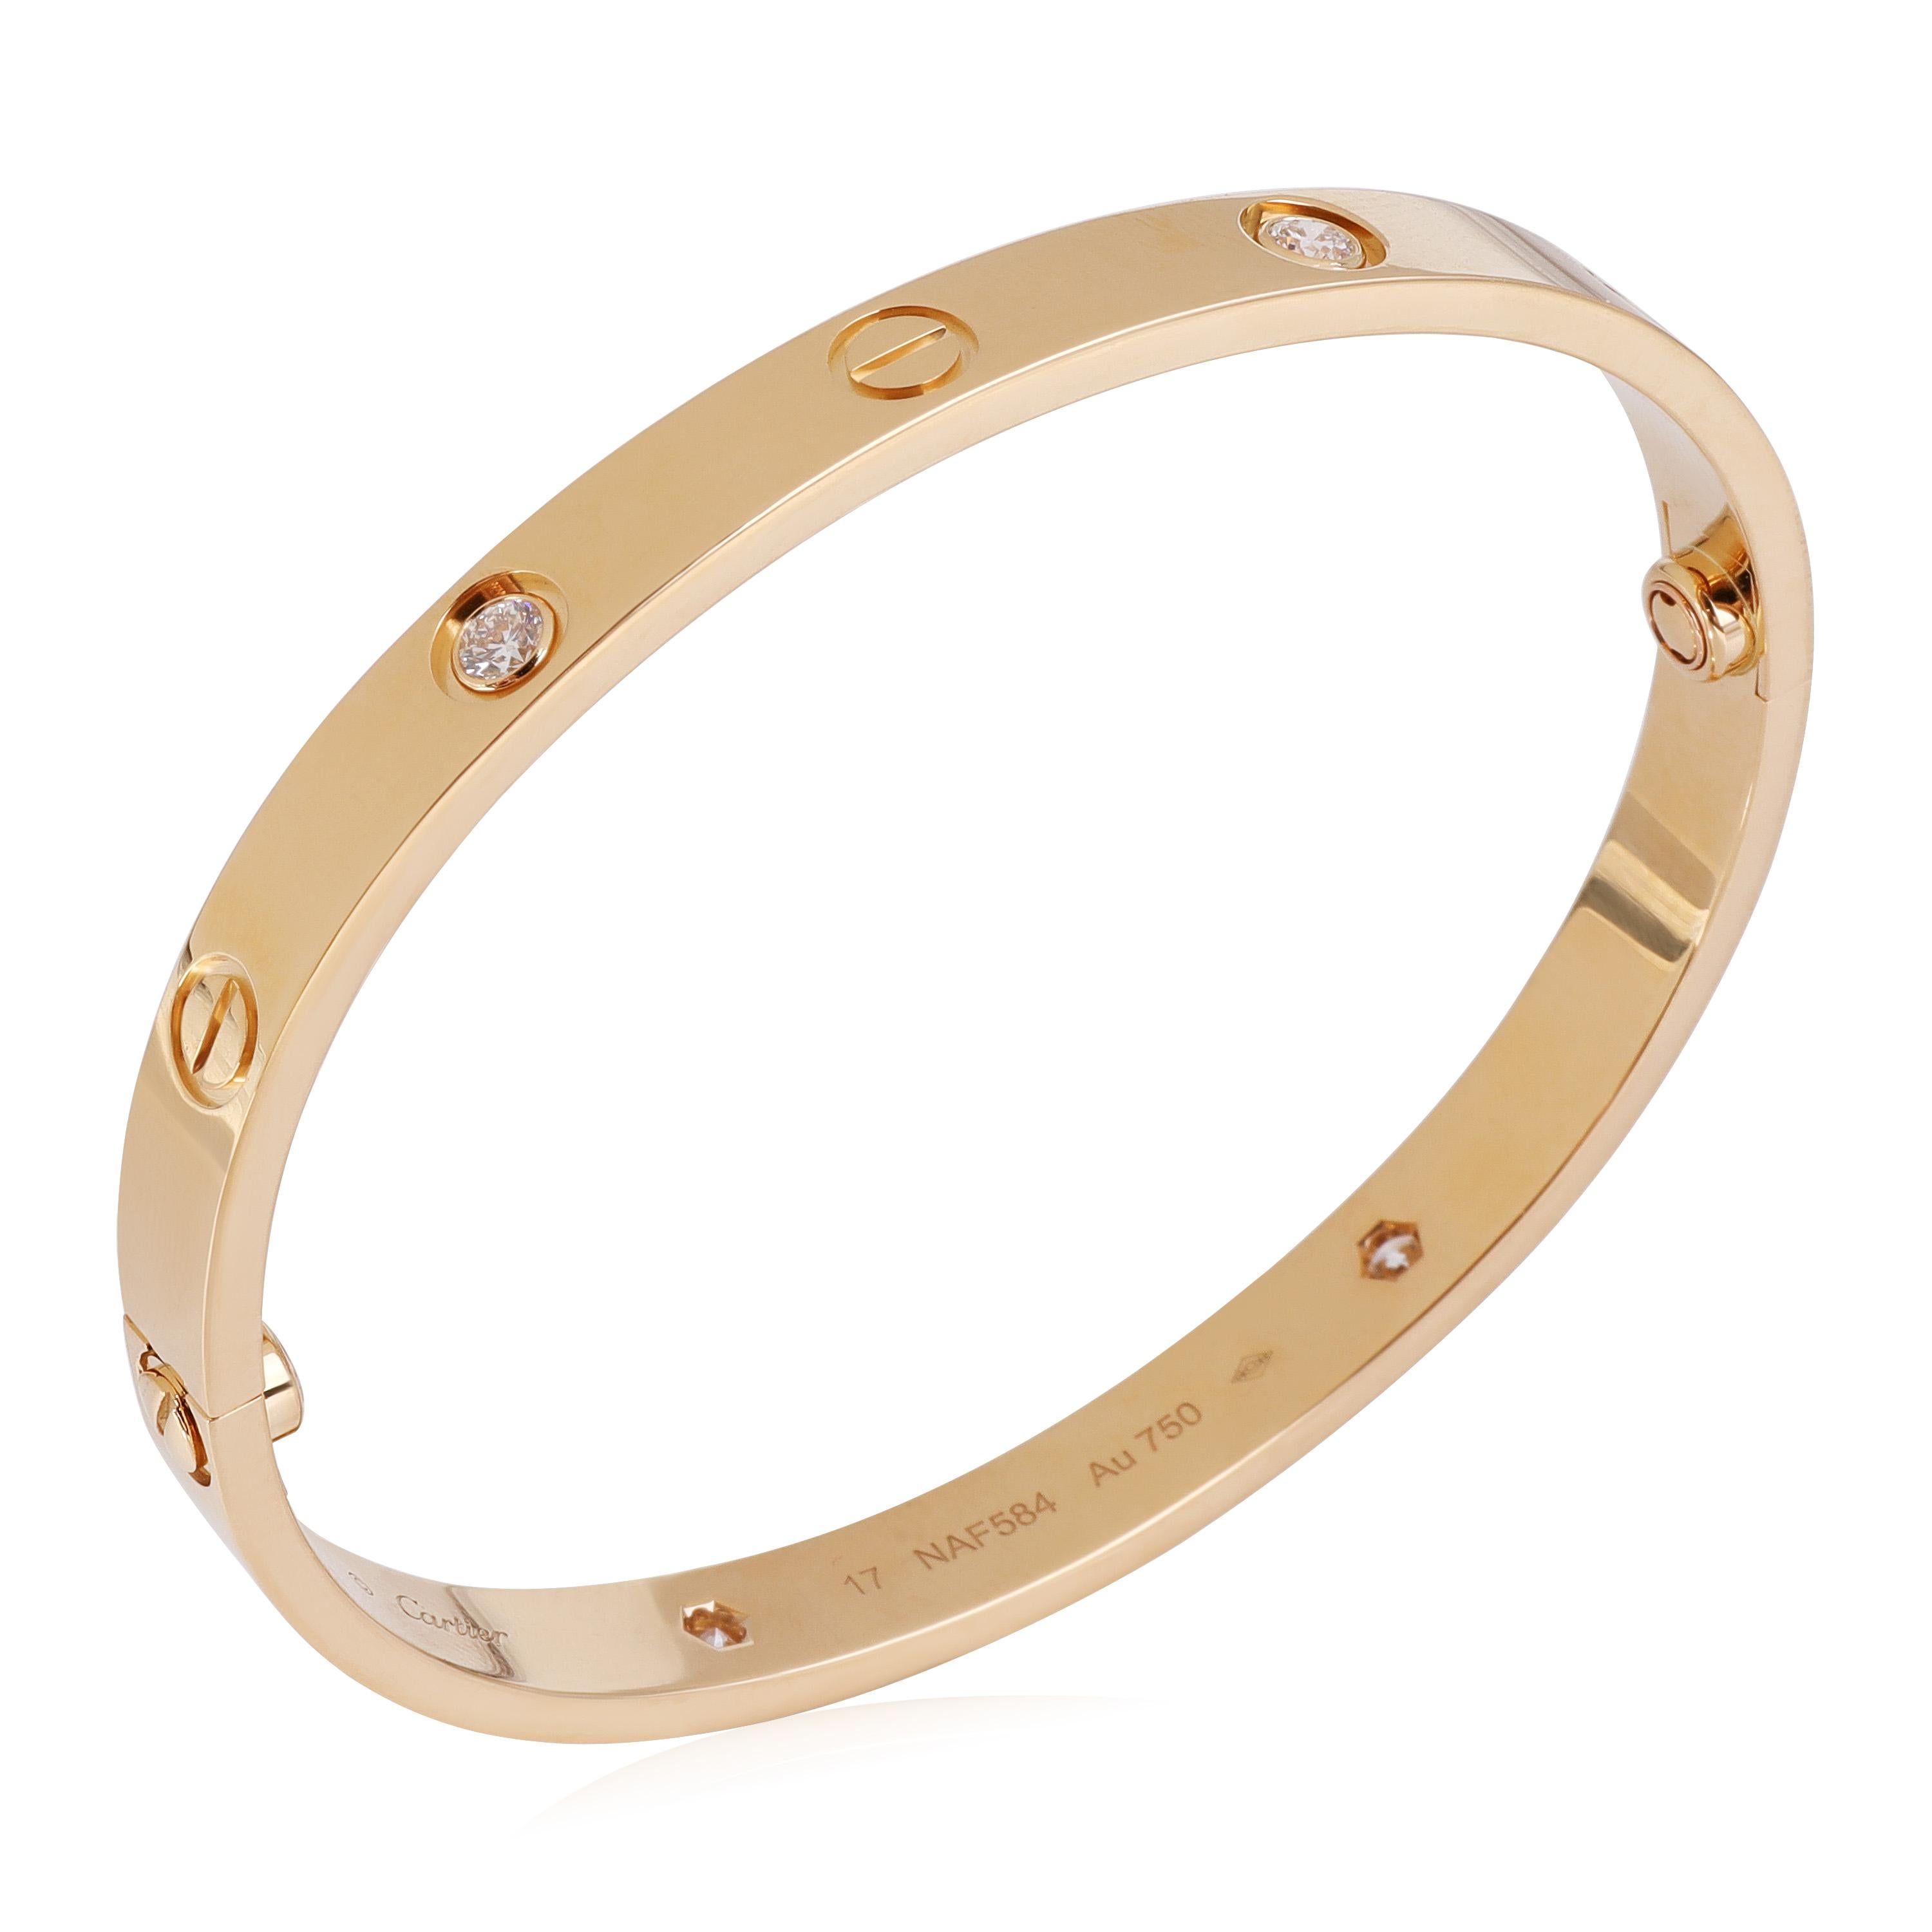 Cartier LOVE Diamond Bracelet in 18k Yellow Gold (Size 17)

PRIMARY DETAILS
SKU: 117316
Listing Title: Cartier LOVE Diamond Bracelet in 18k Yellow Gold (Size 17)
Condition Description: Retails for 11100 USD. In excellent condition. Size 17. Comes